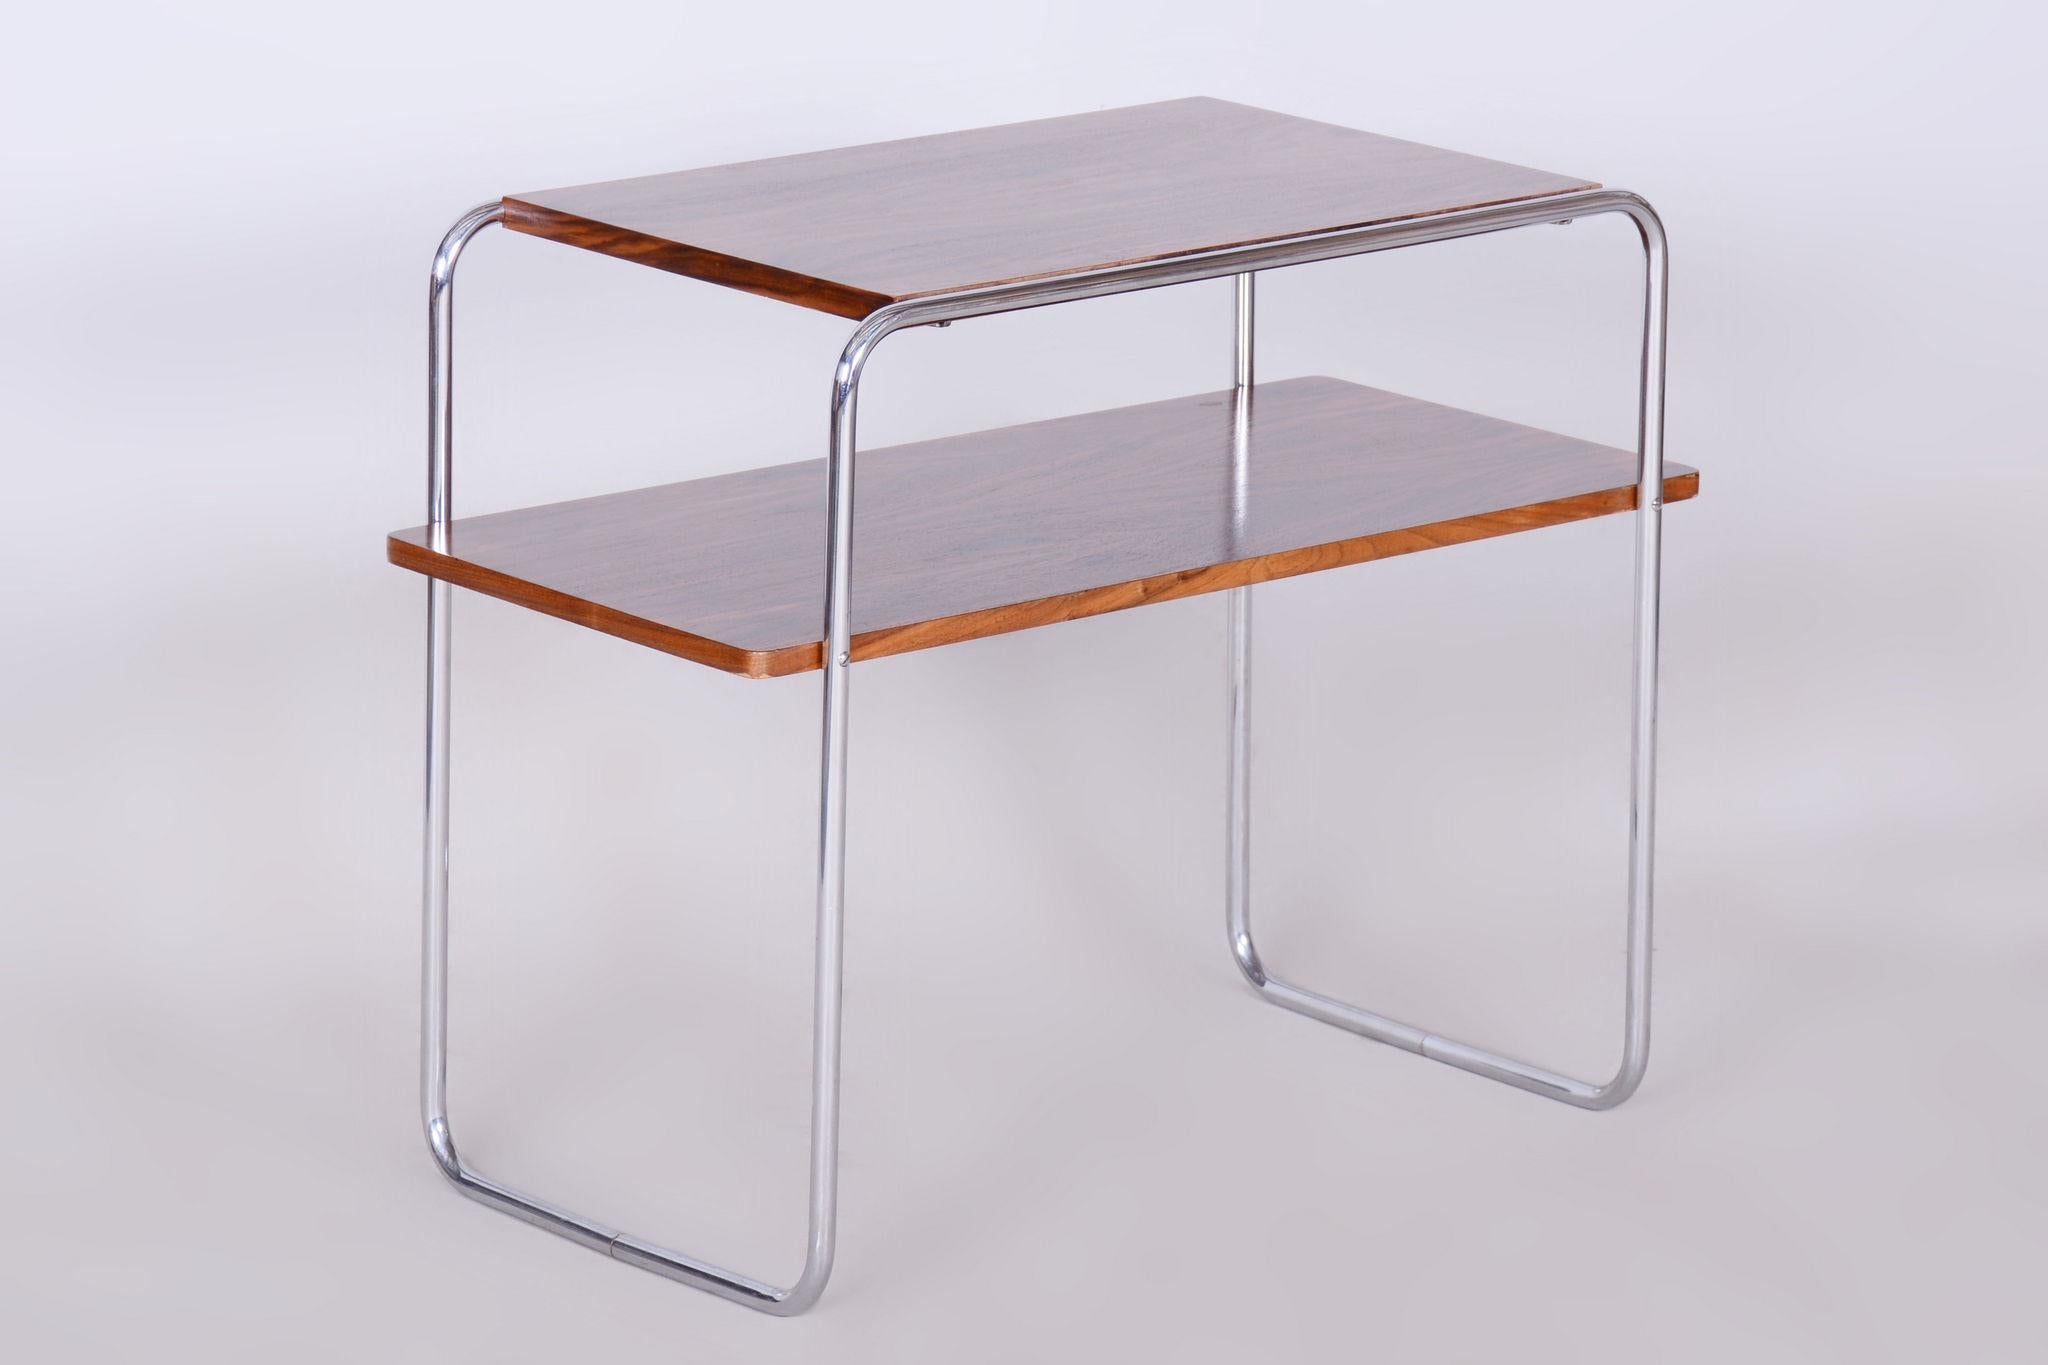 Mid-20th Century Restored Bauhaus Side Table, Hynek Gottwald, Walnut, Chrome, Czechia, 1930s For Sale